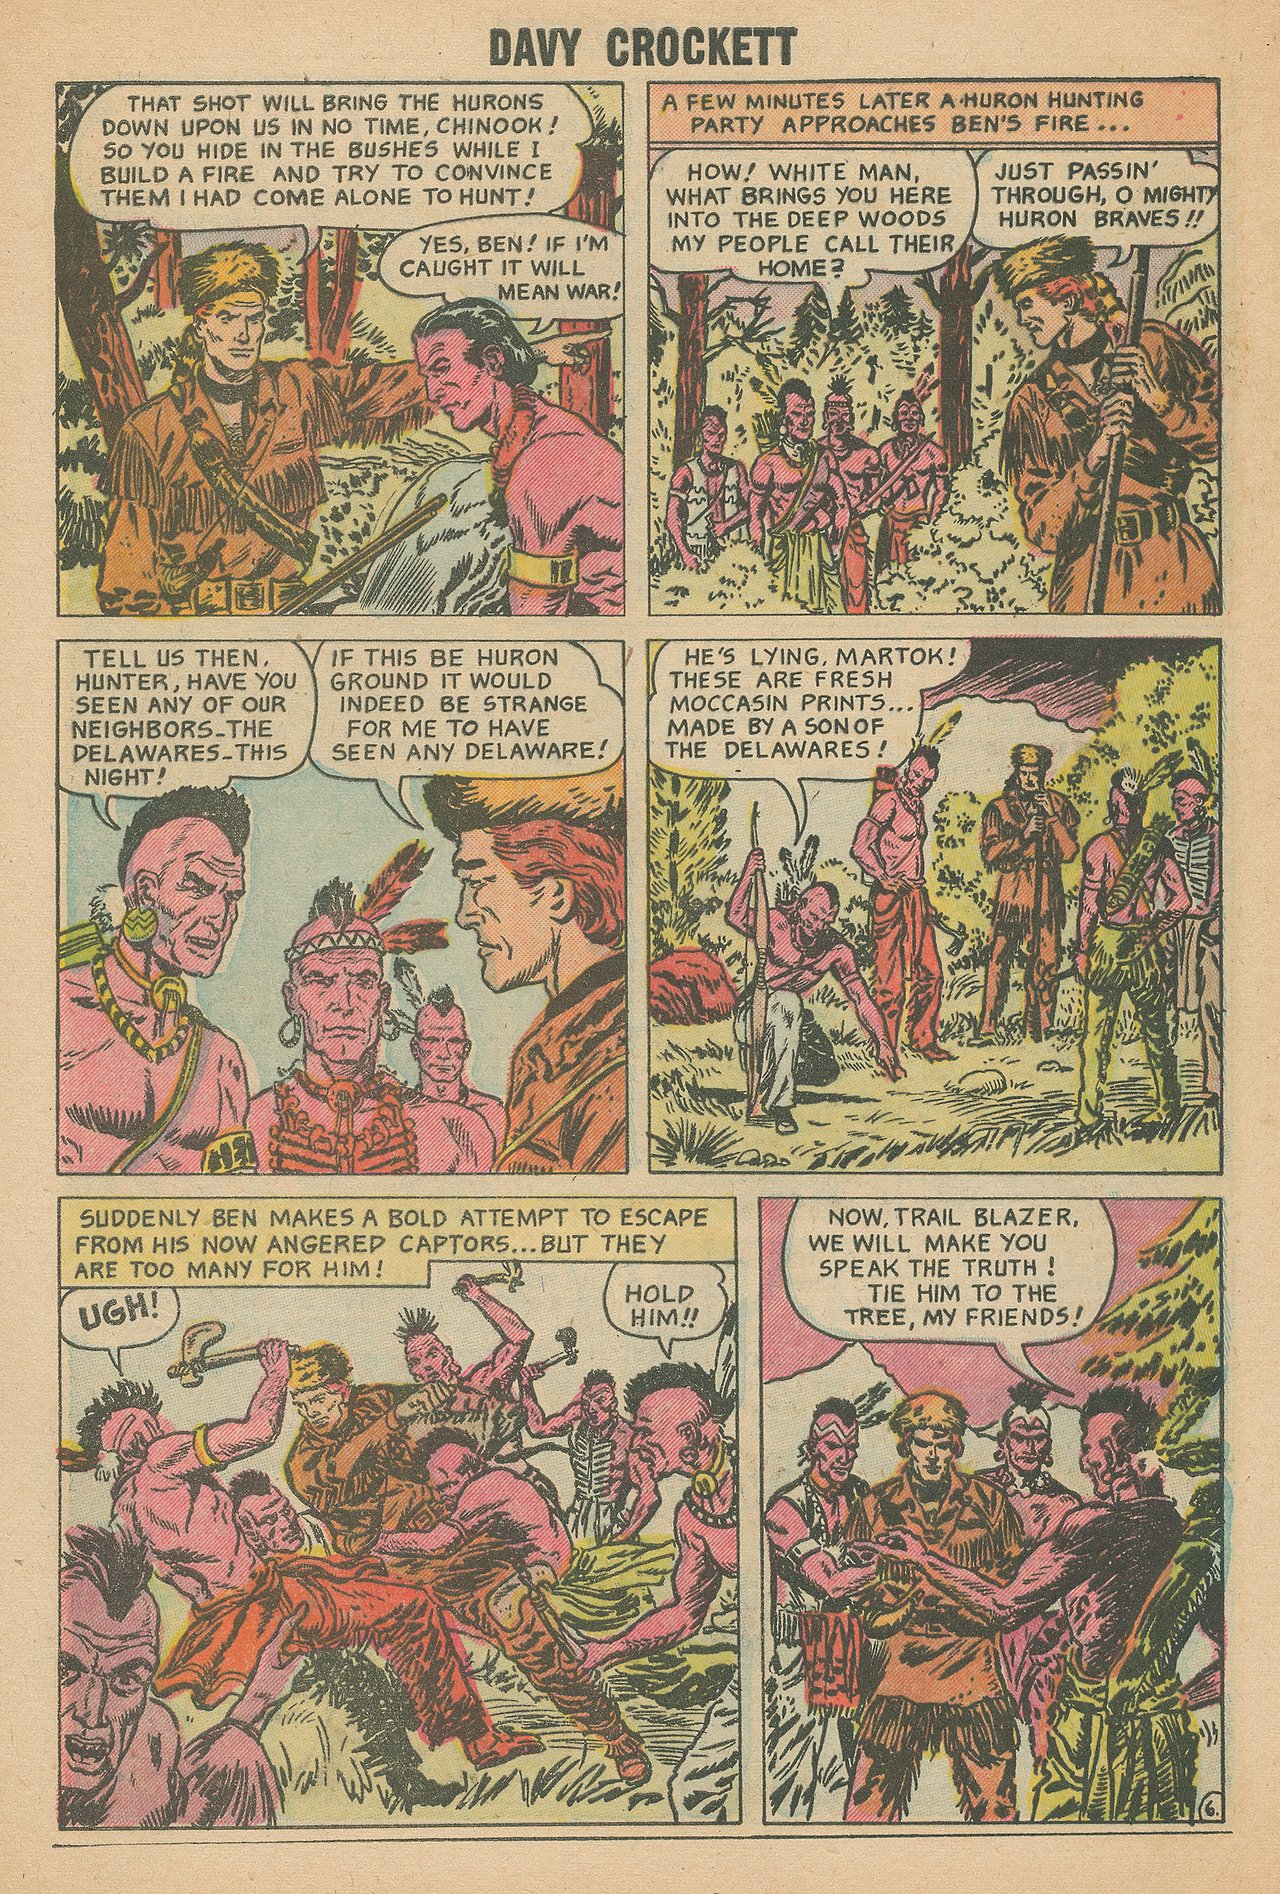 Read online Davy Crockett comic -  Issue #2 - 28